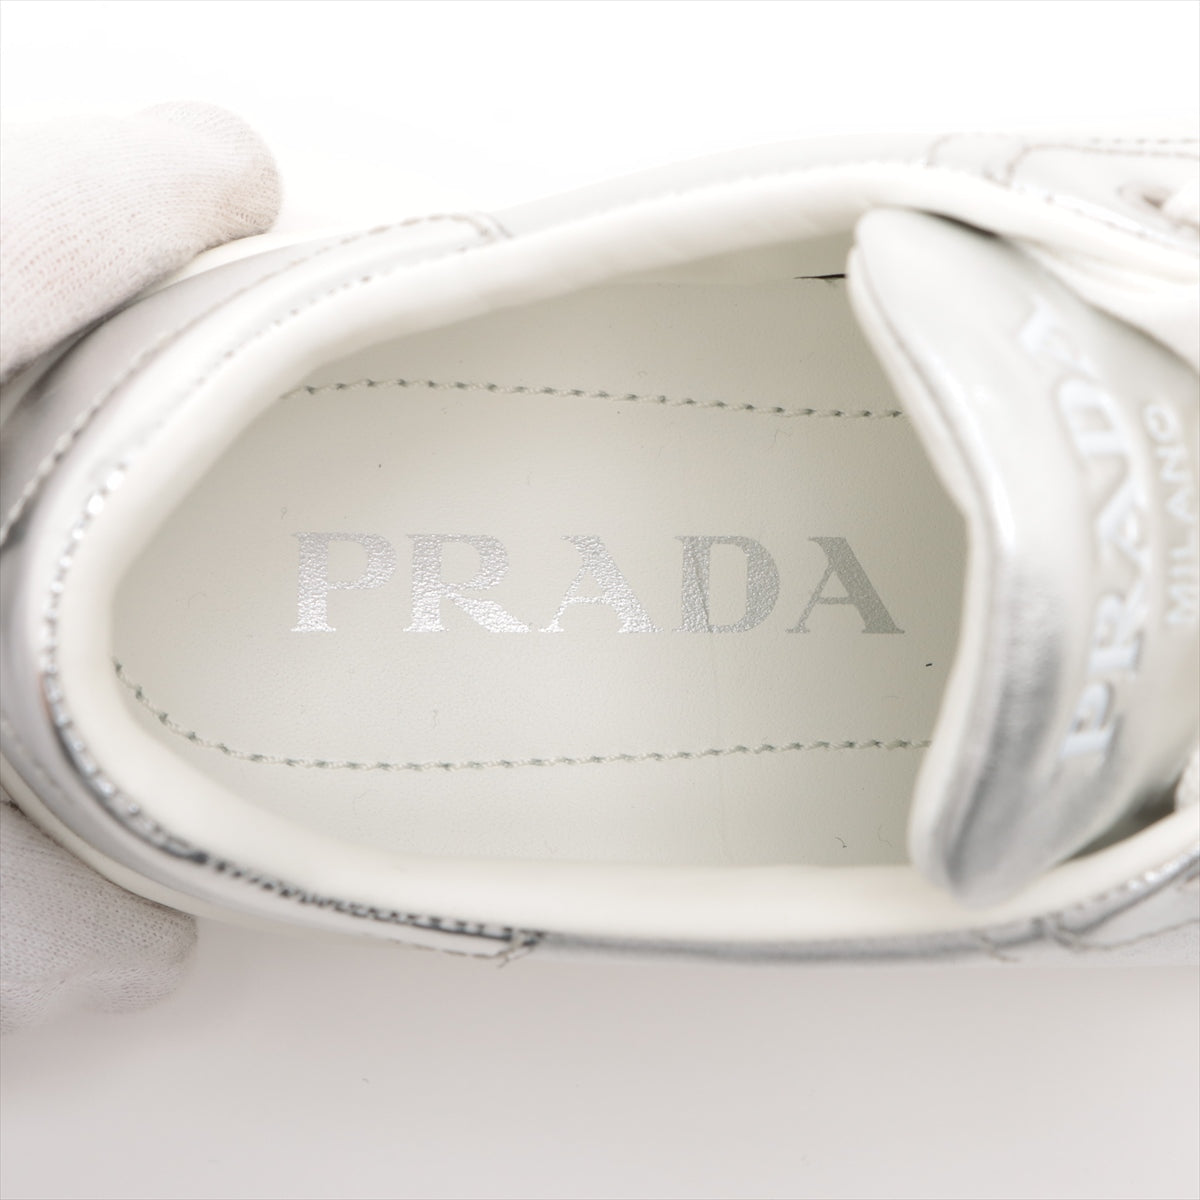 Prada Leather Trainers 36  Silver 1E535